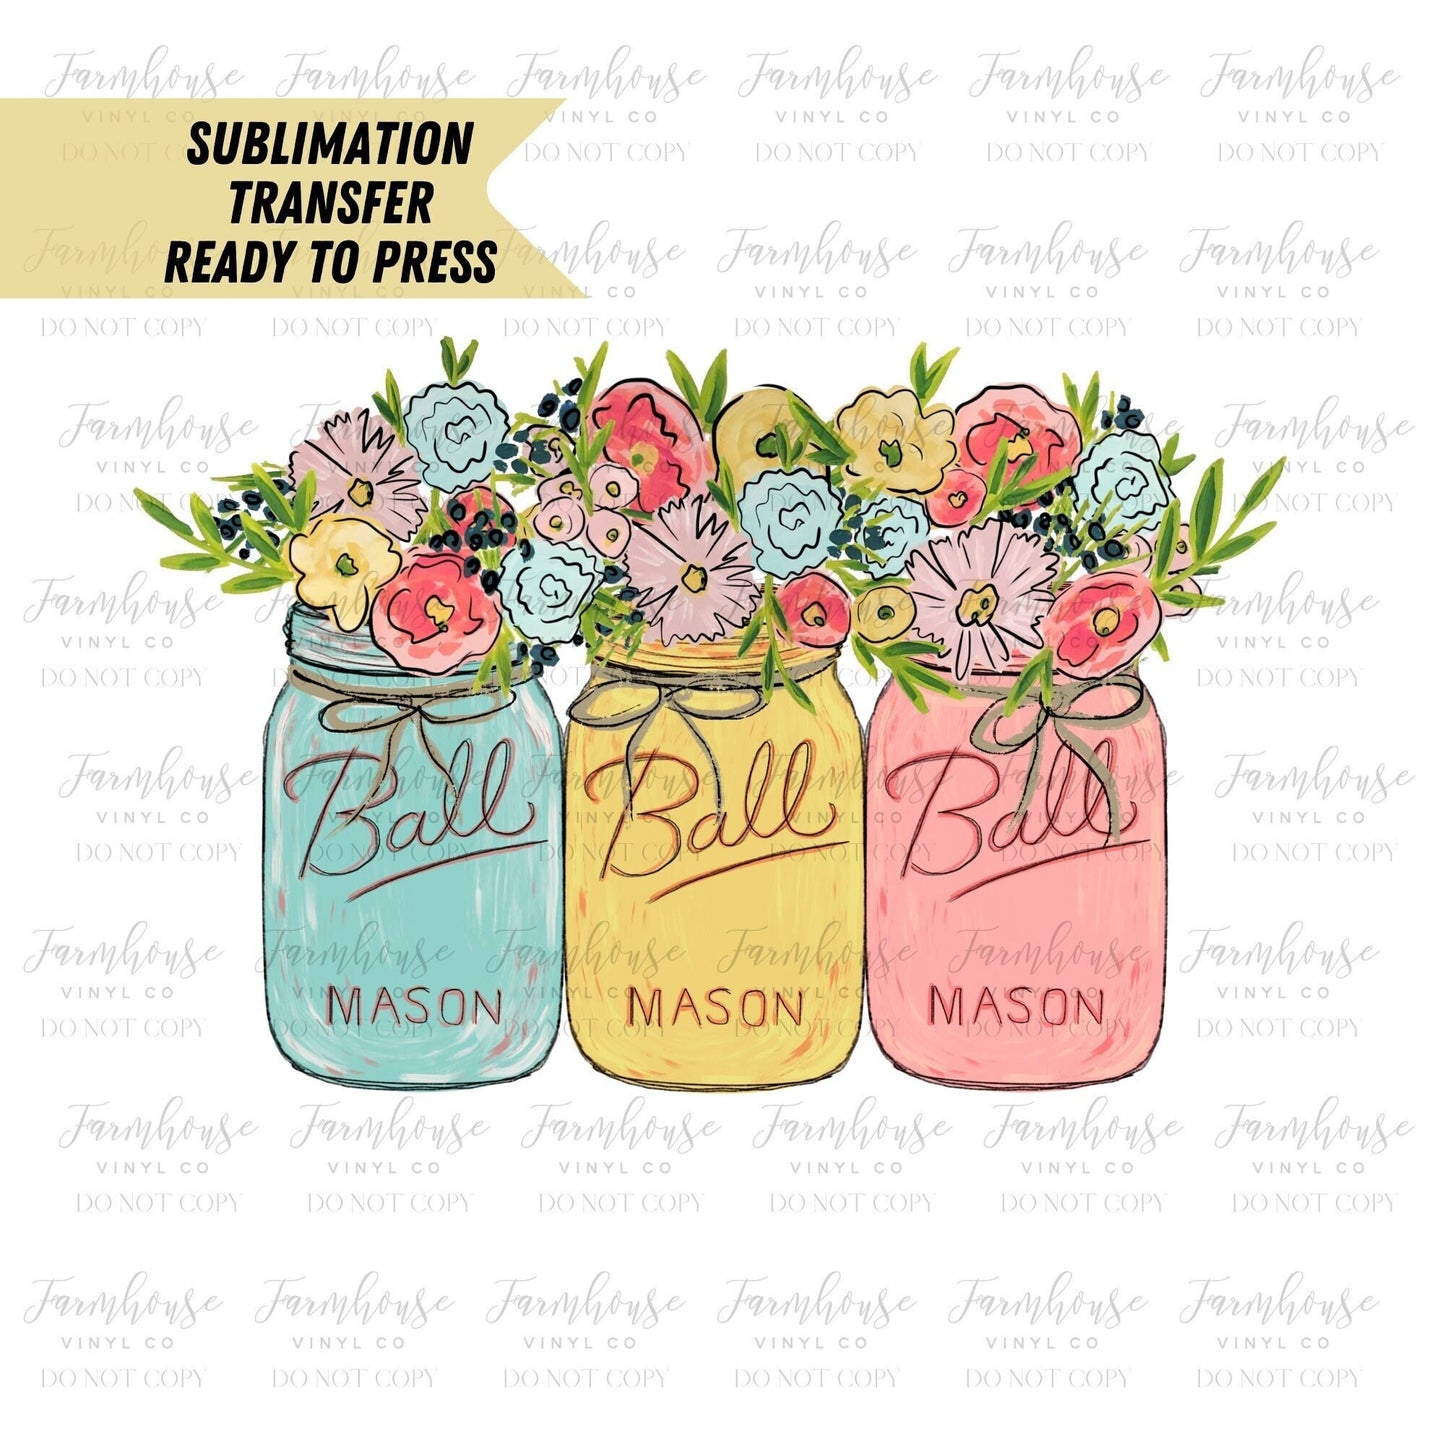 Spring Floral Mason Jar Design, Ready To Press, Sublimation Transfers, DIY Sublimation Tee, Transfer Ready To Press, Heat Transfer Design - Farmhouse Vinyl Co